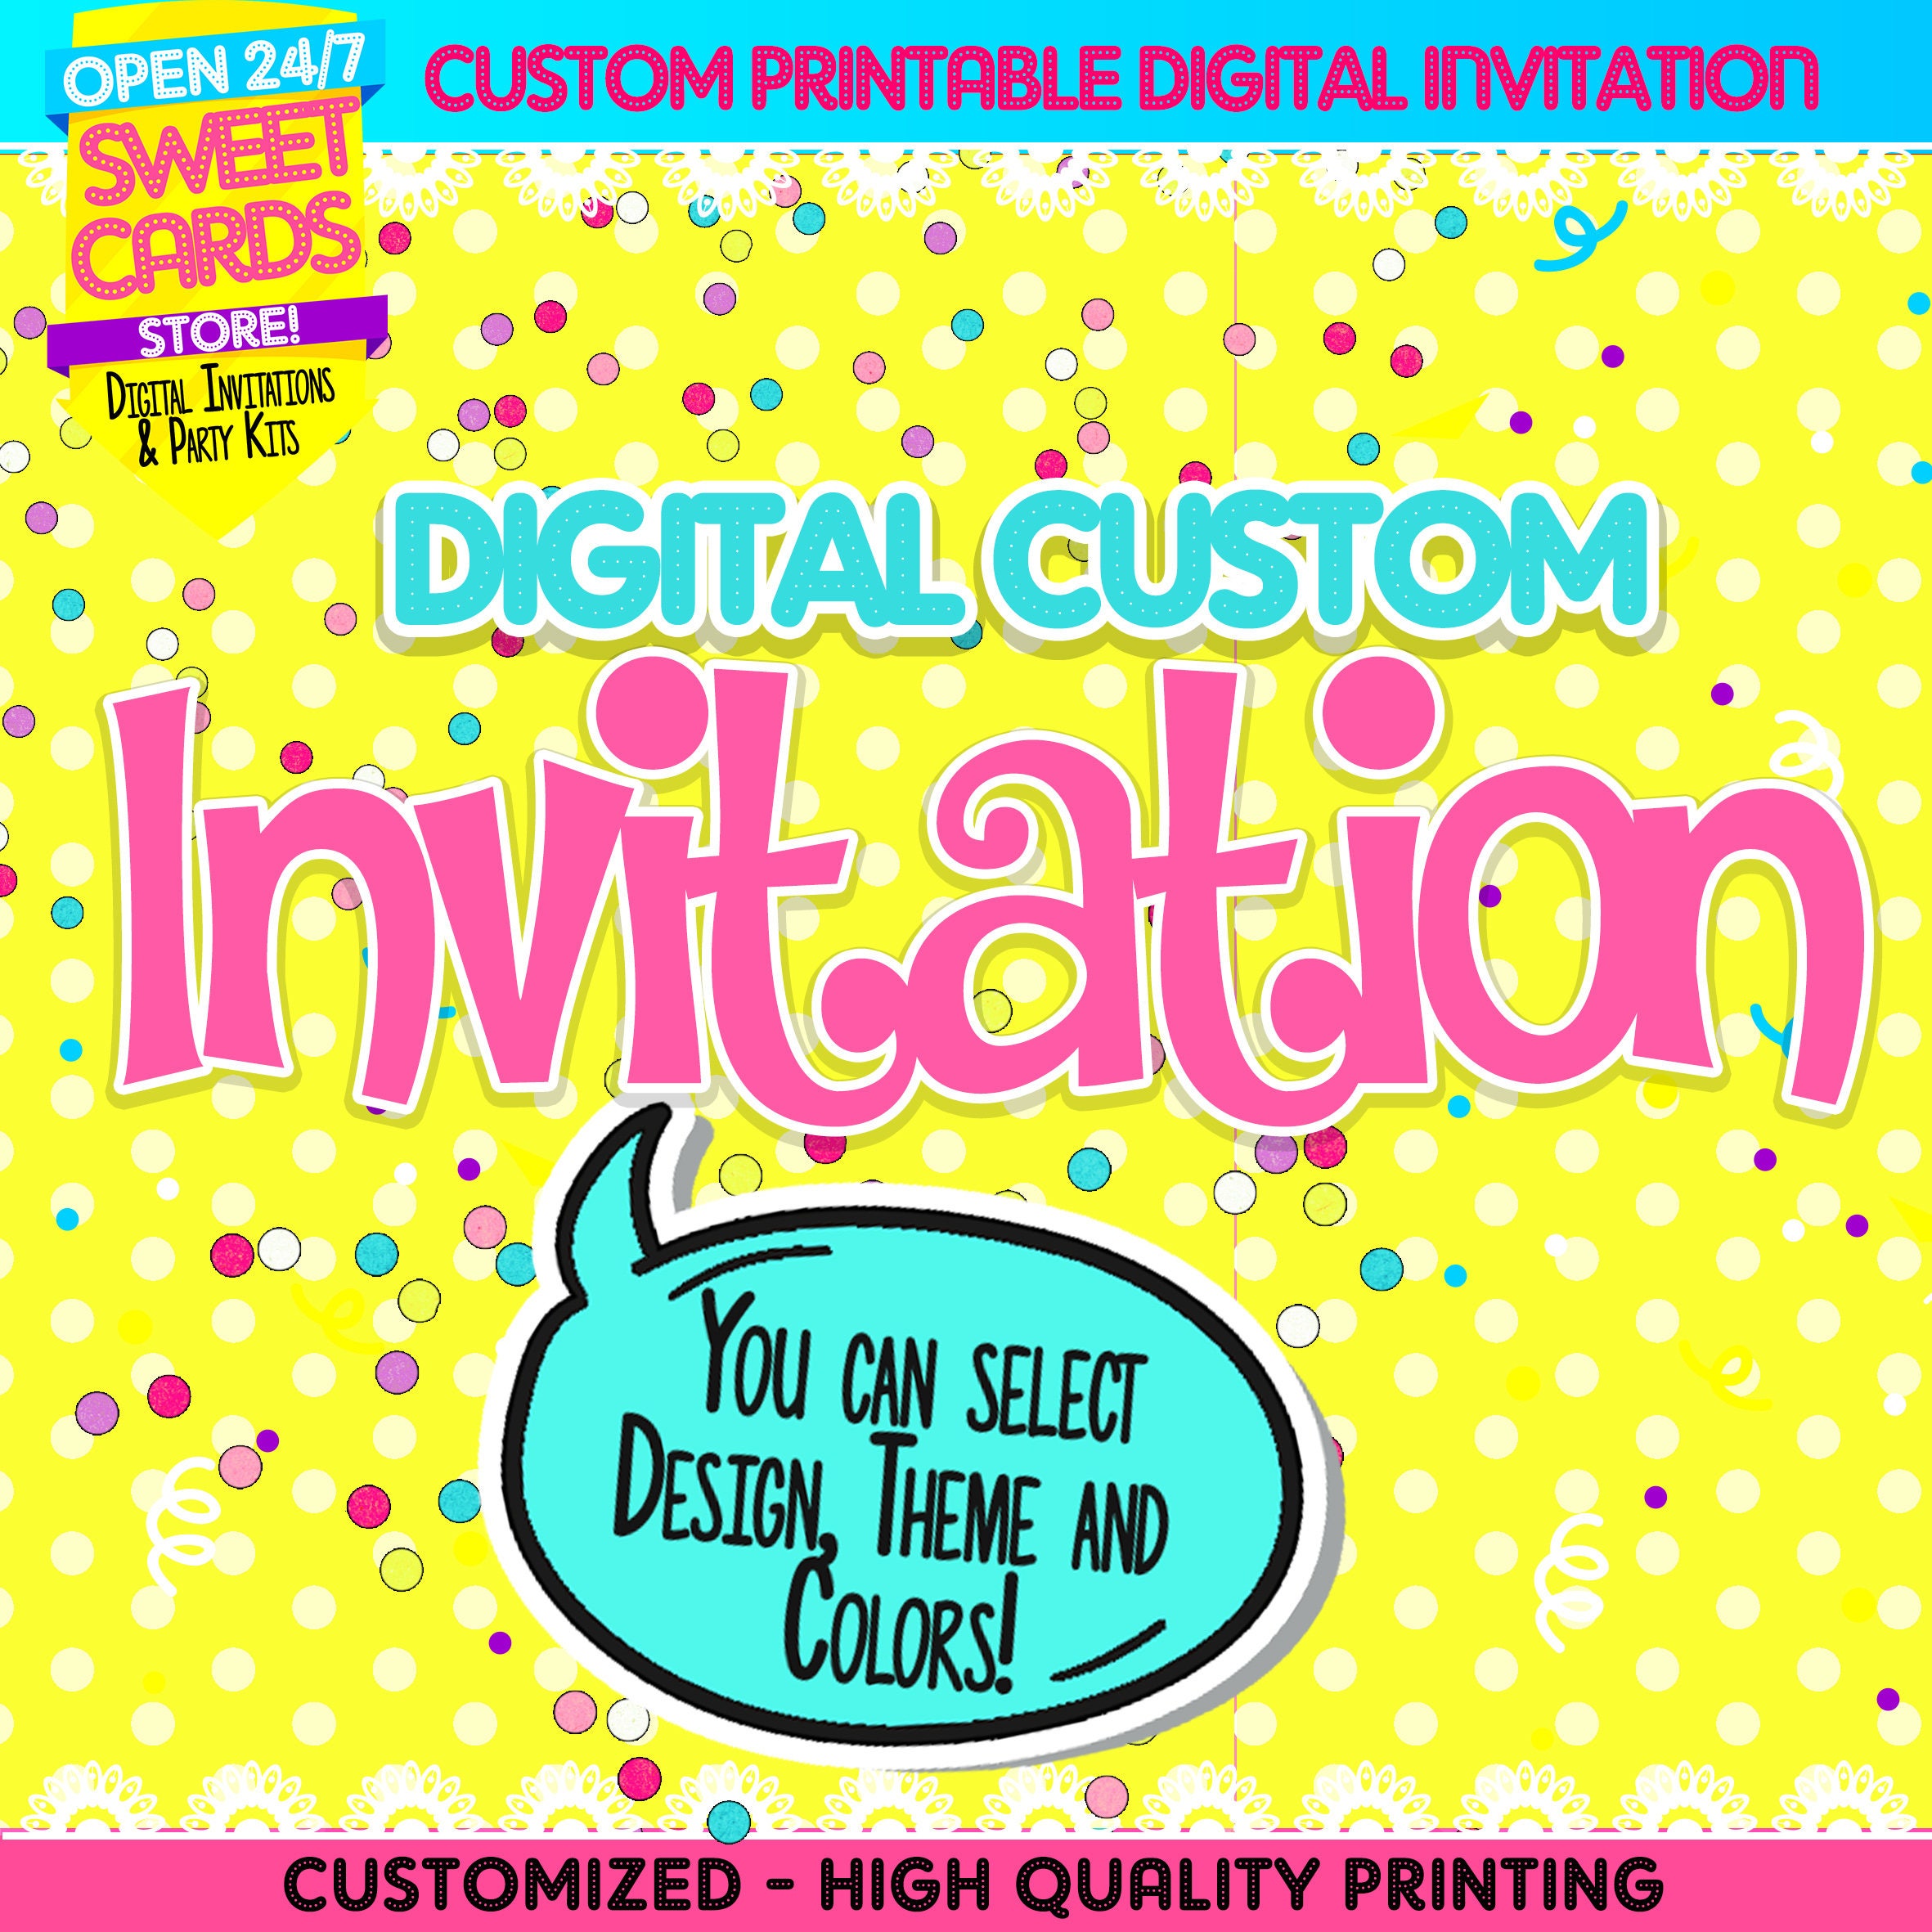 custom-printable-invitation-personalized-invitation-digital-etsy